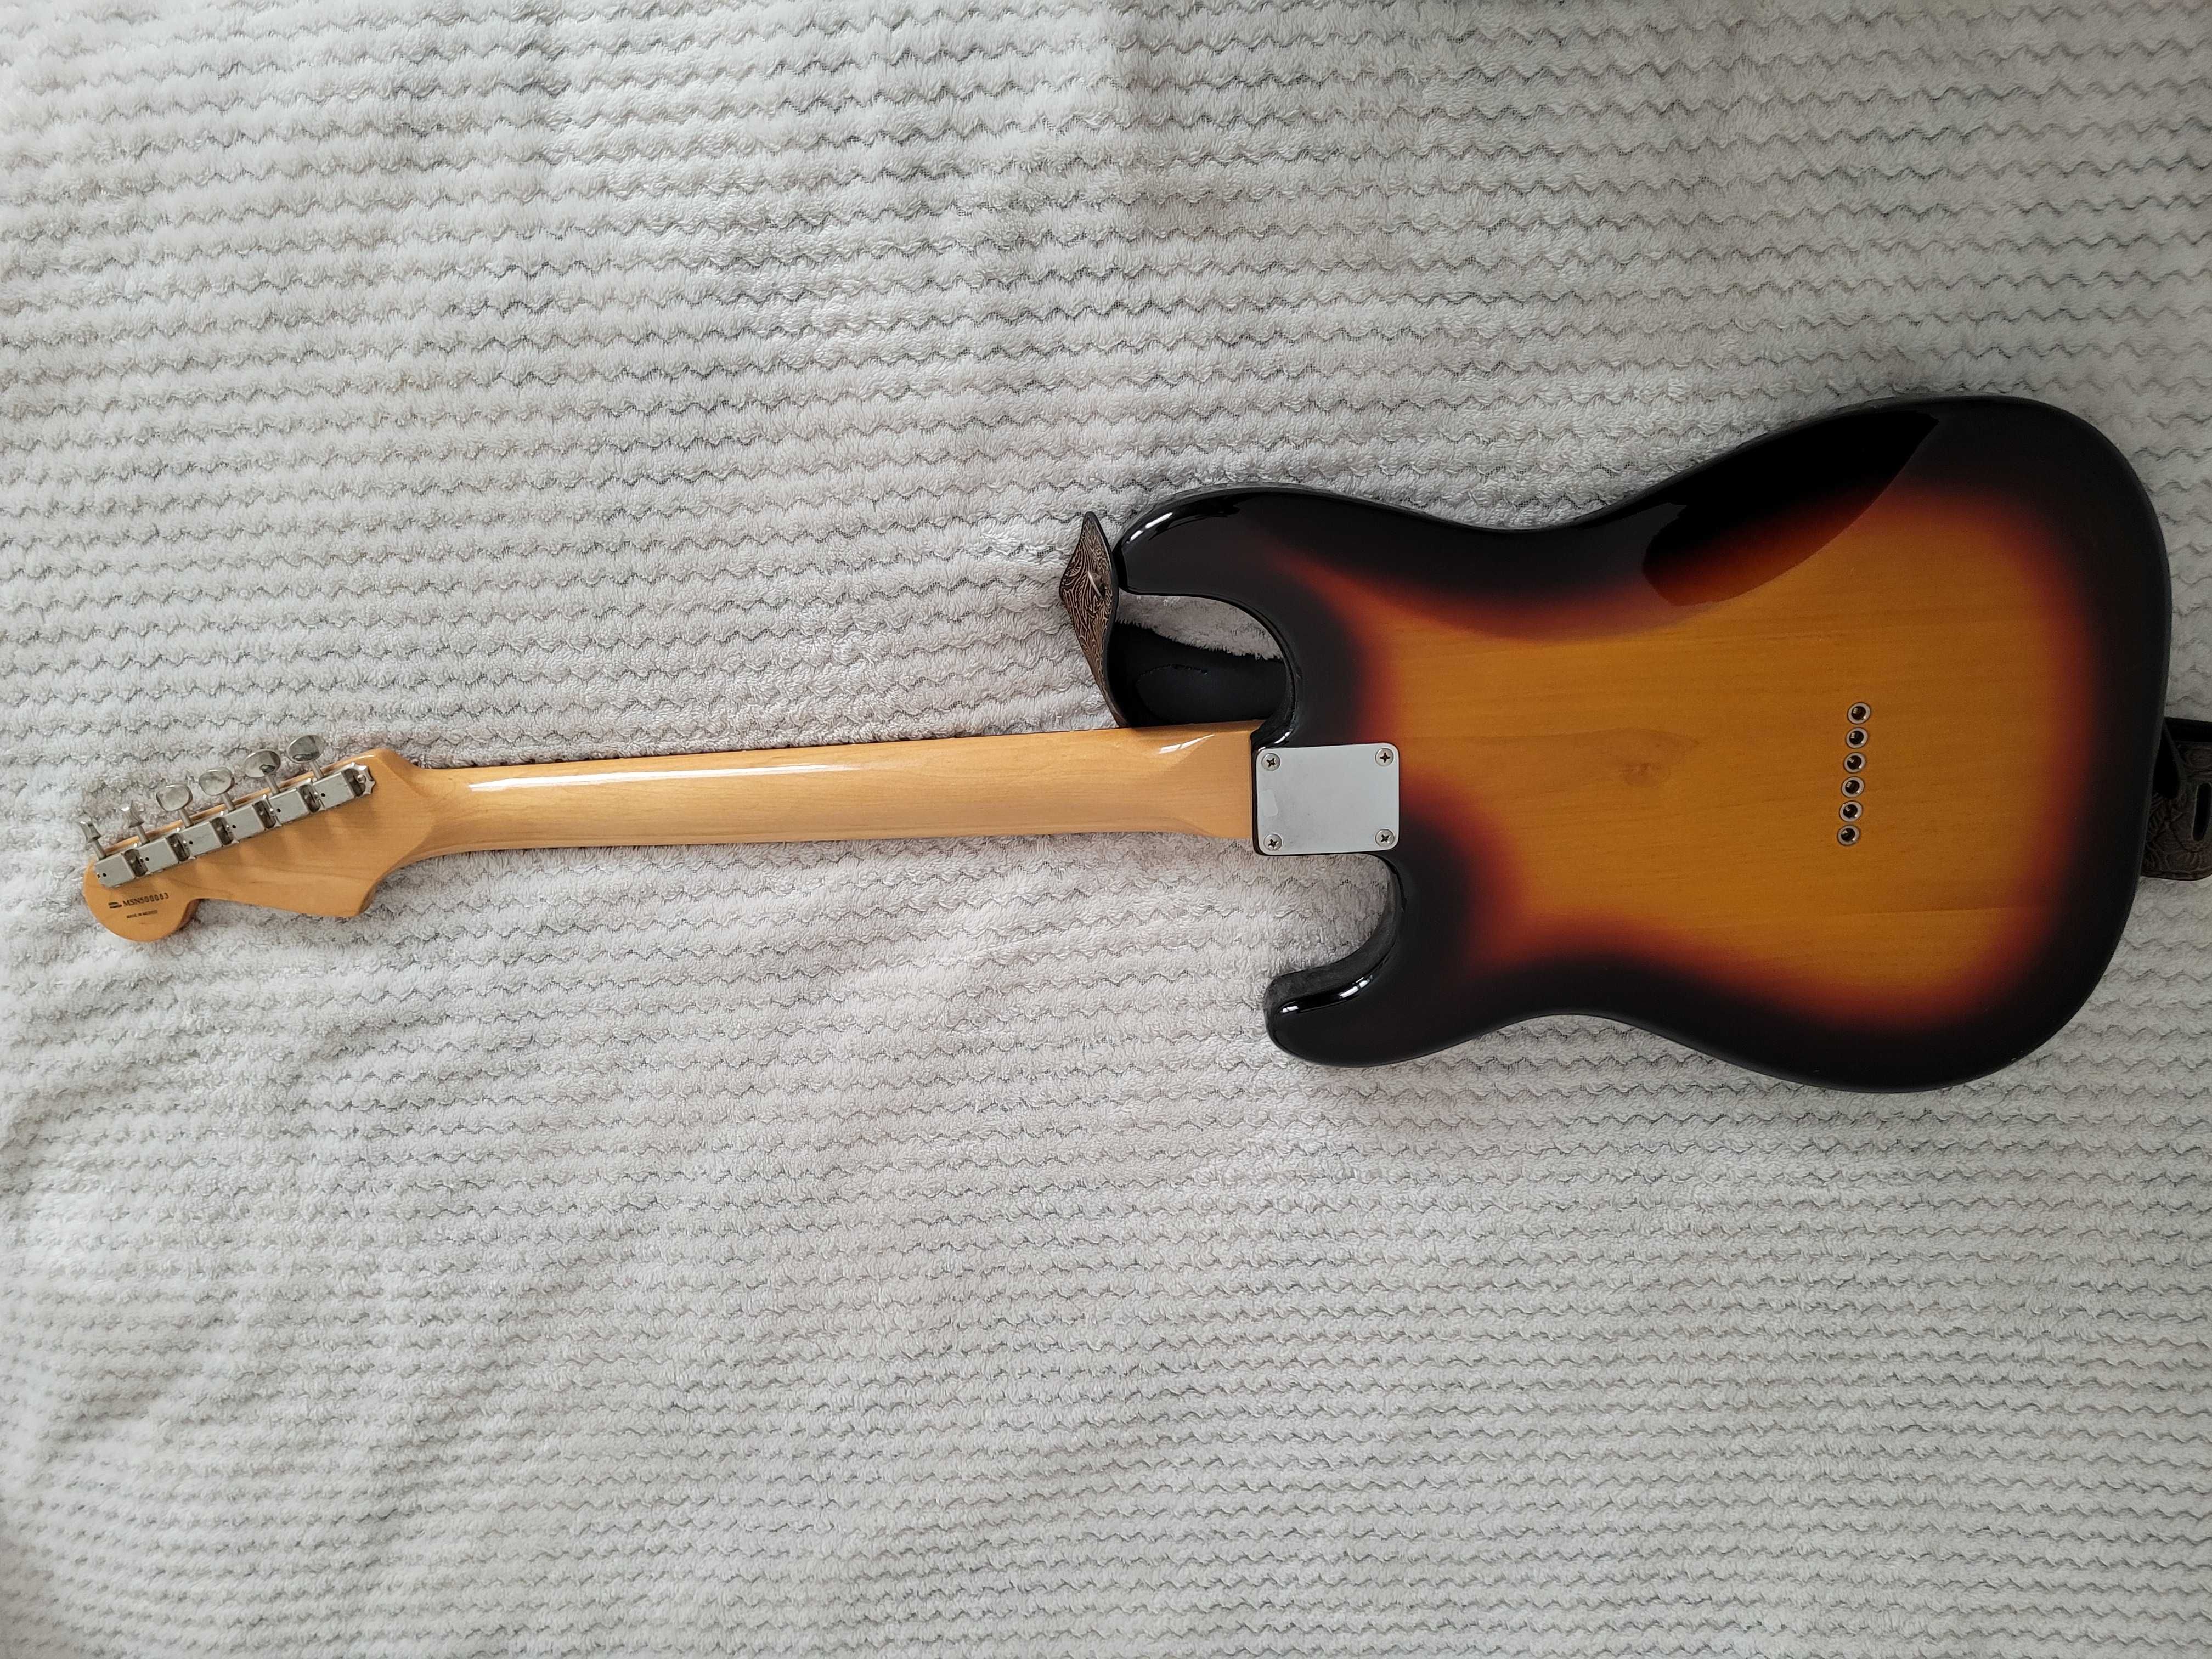 Fender Stratocaster Robert Cray Signature Series hardtail 2004